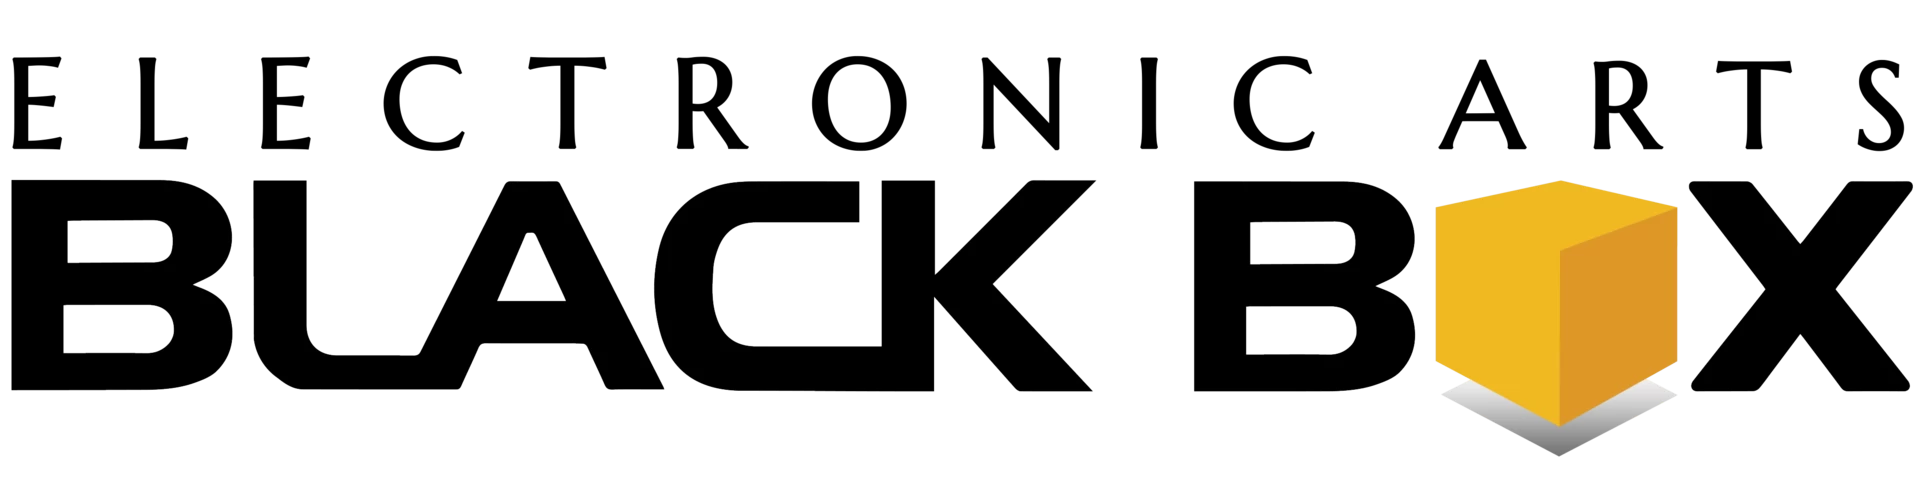 EA Black Box developer logo